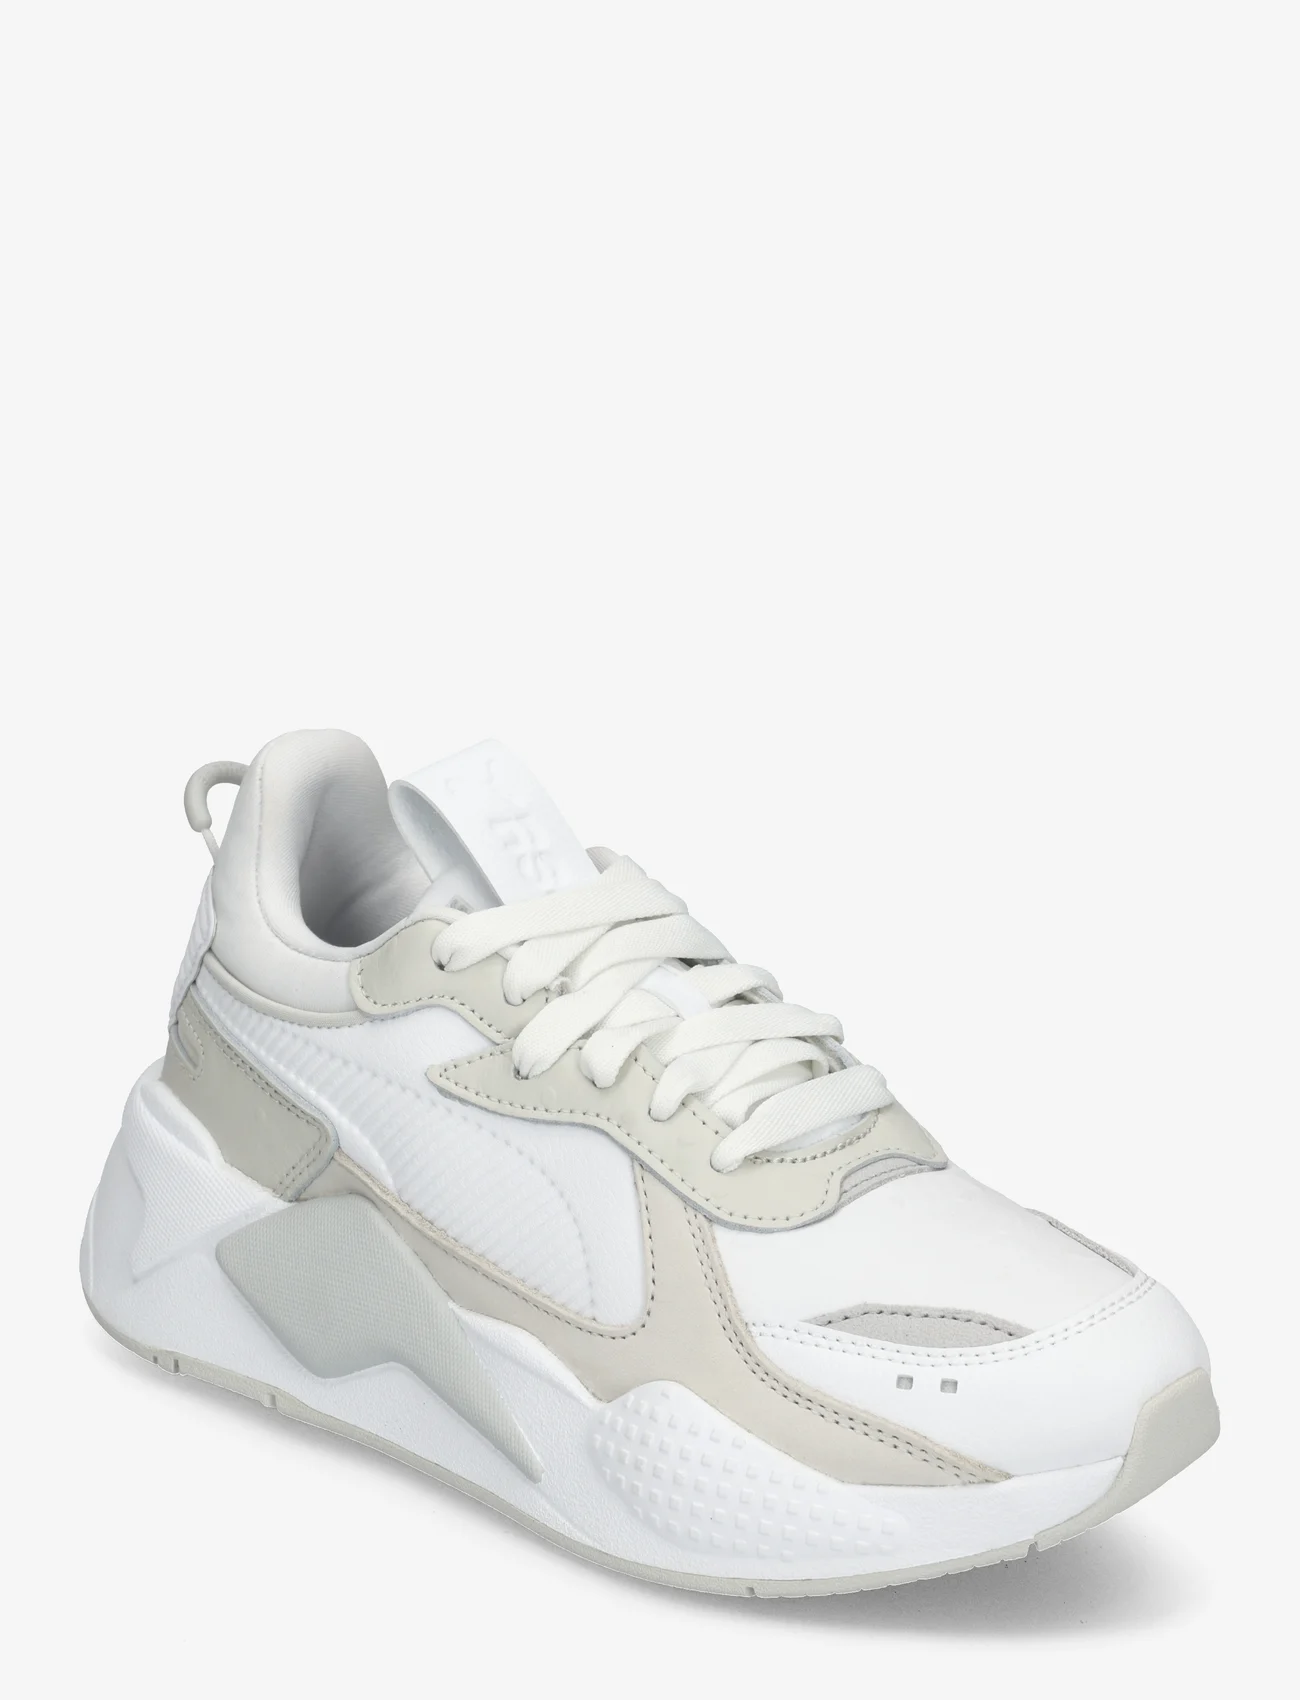 PUMA - RS-X Ostrich Wns - low top sneakers - puma white-sedate gray - 0